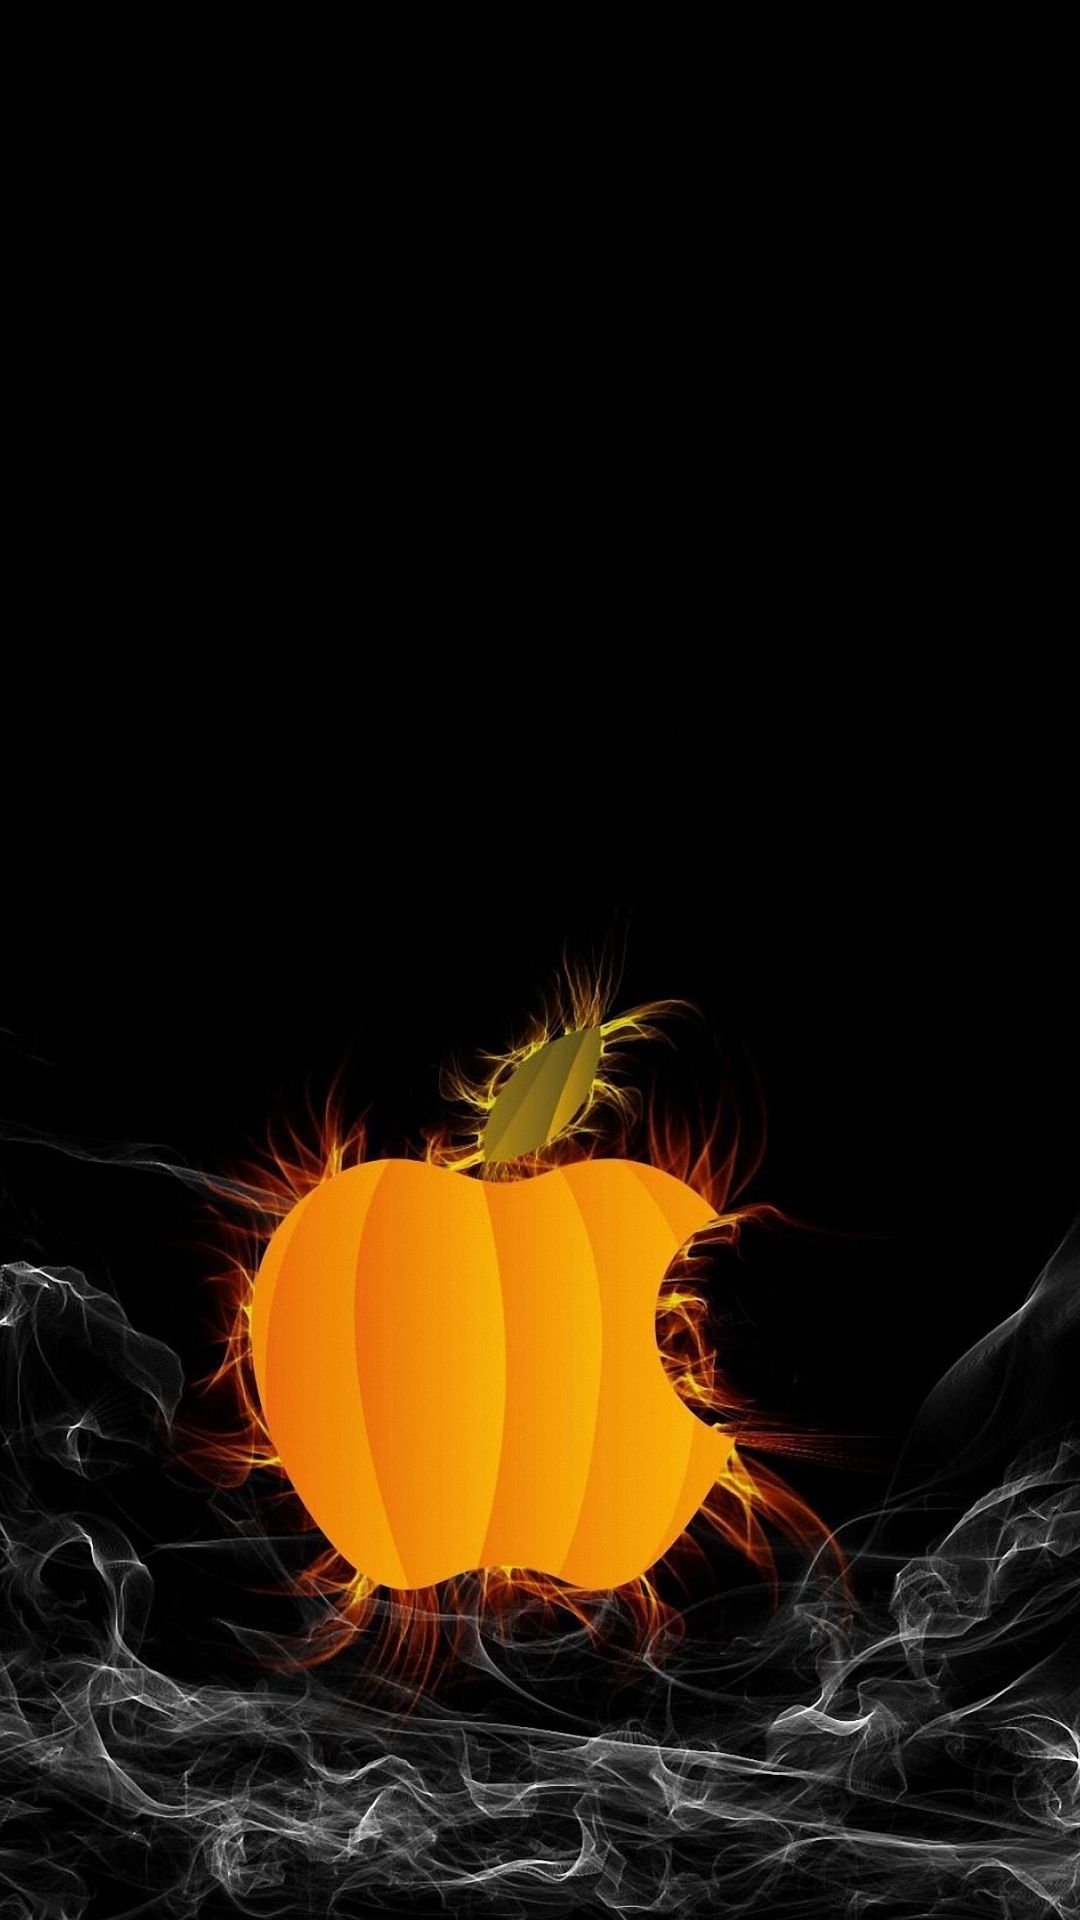 iPumpkin to see more creatively spooky Halloween wallpaper!. (avec image). Fond d'écran halloween, Fond ecran halloween, Fond d'écran apple watch